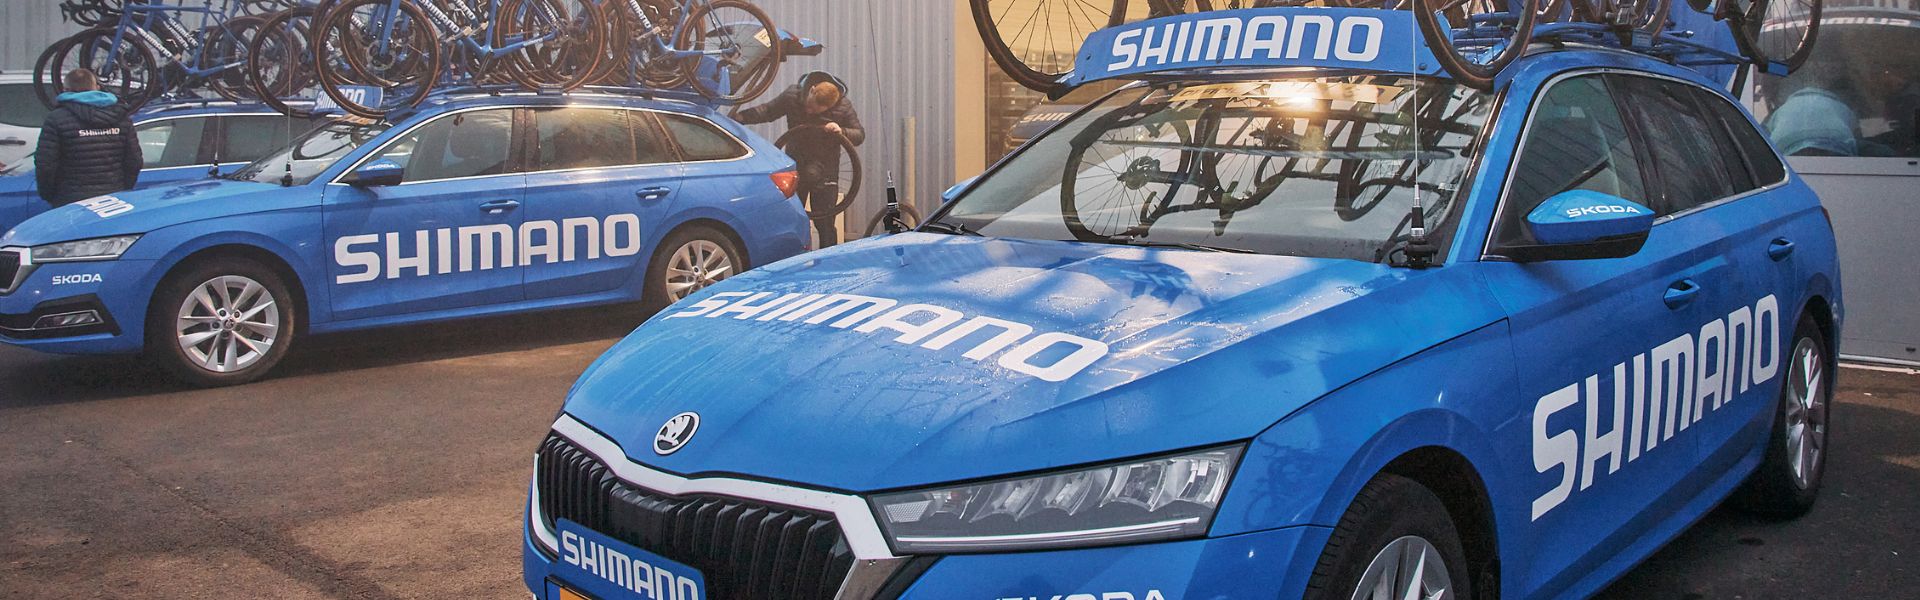 Shimano Human Science : Paris-Roubaix à vélo